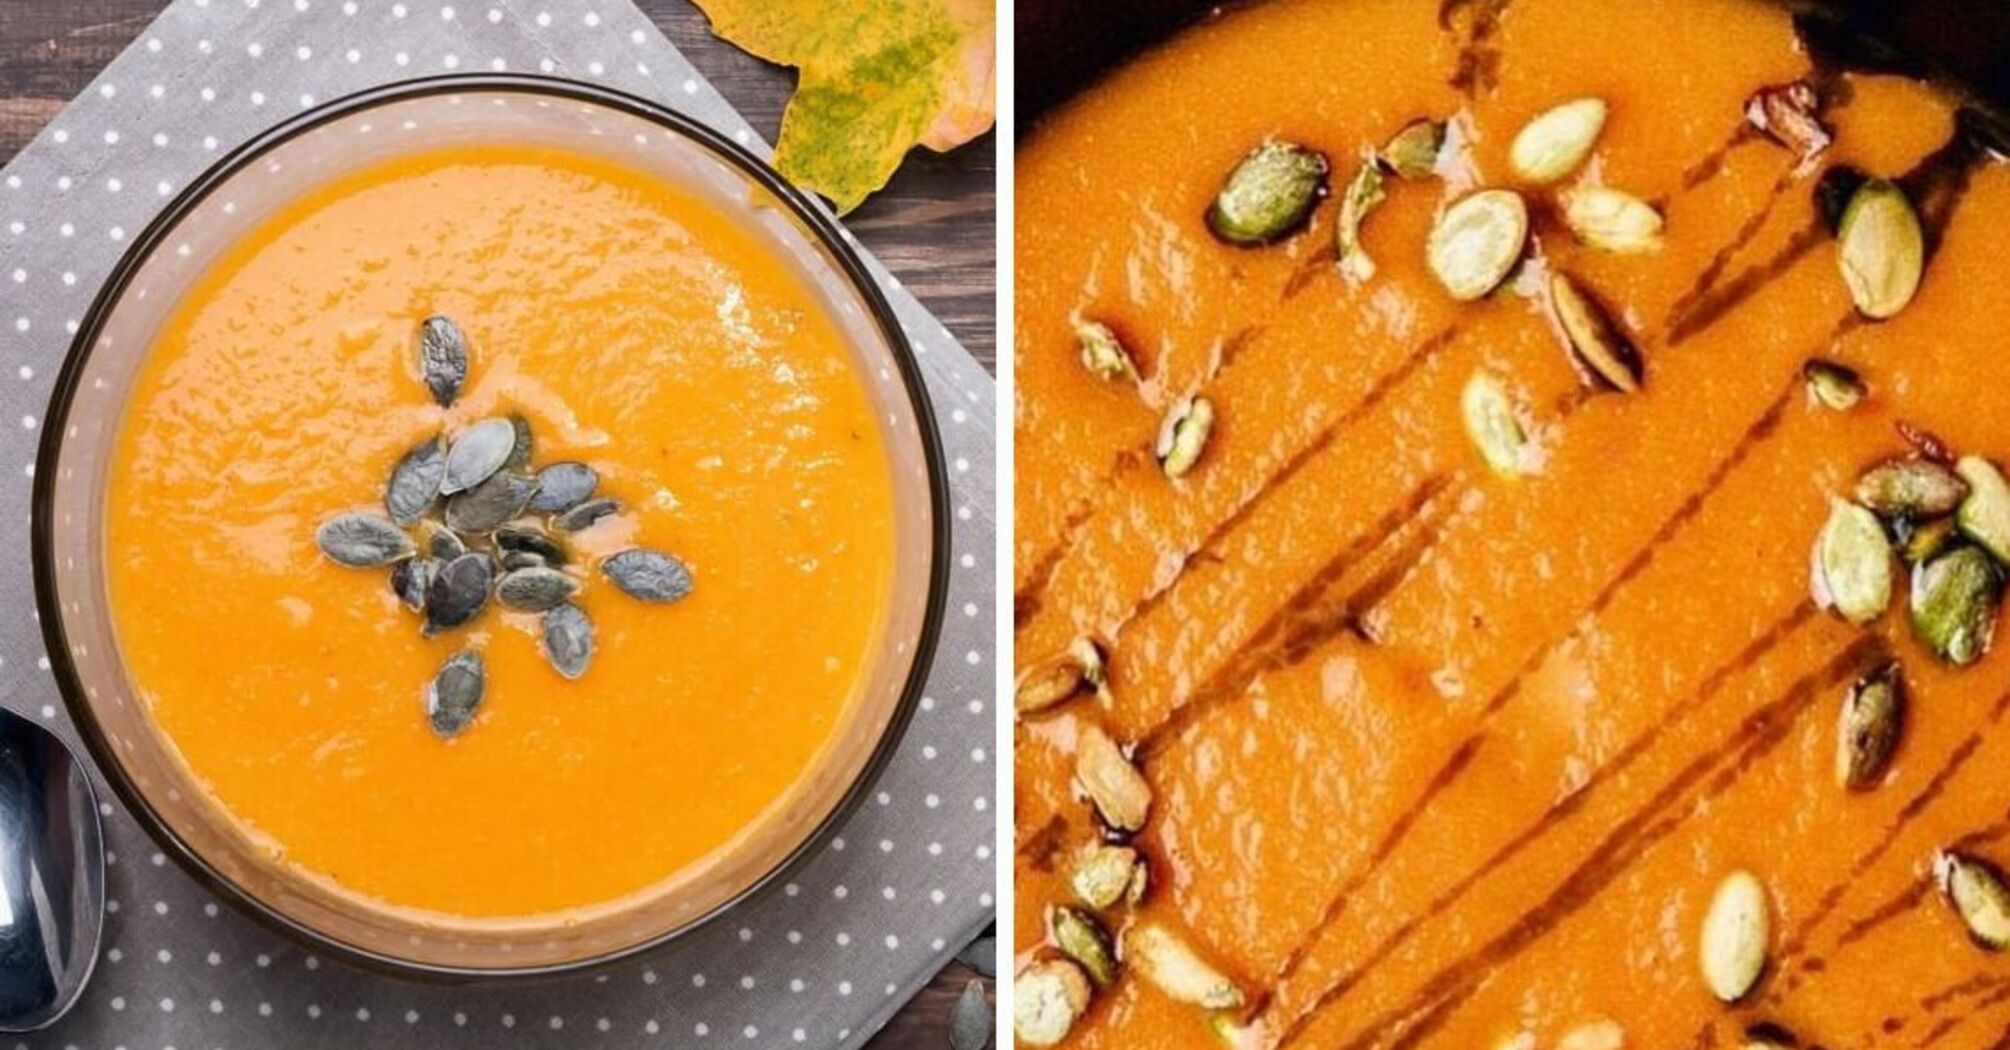 How to make the pumpkin cream soup